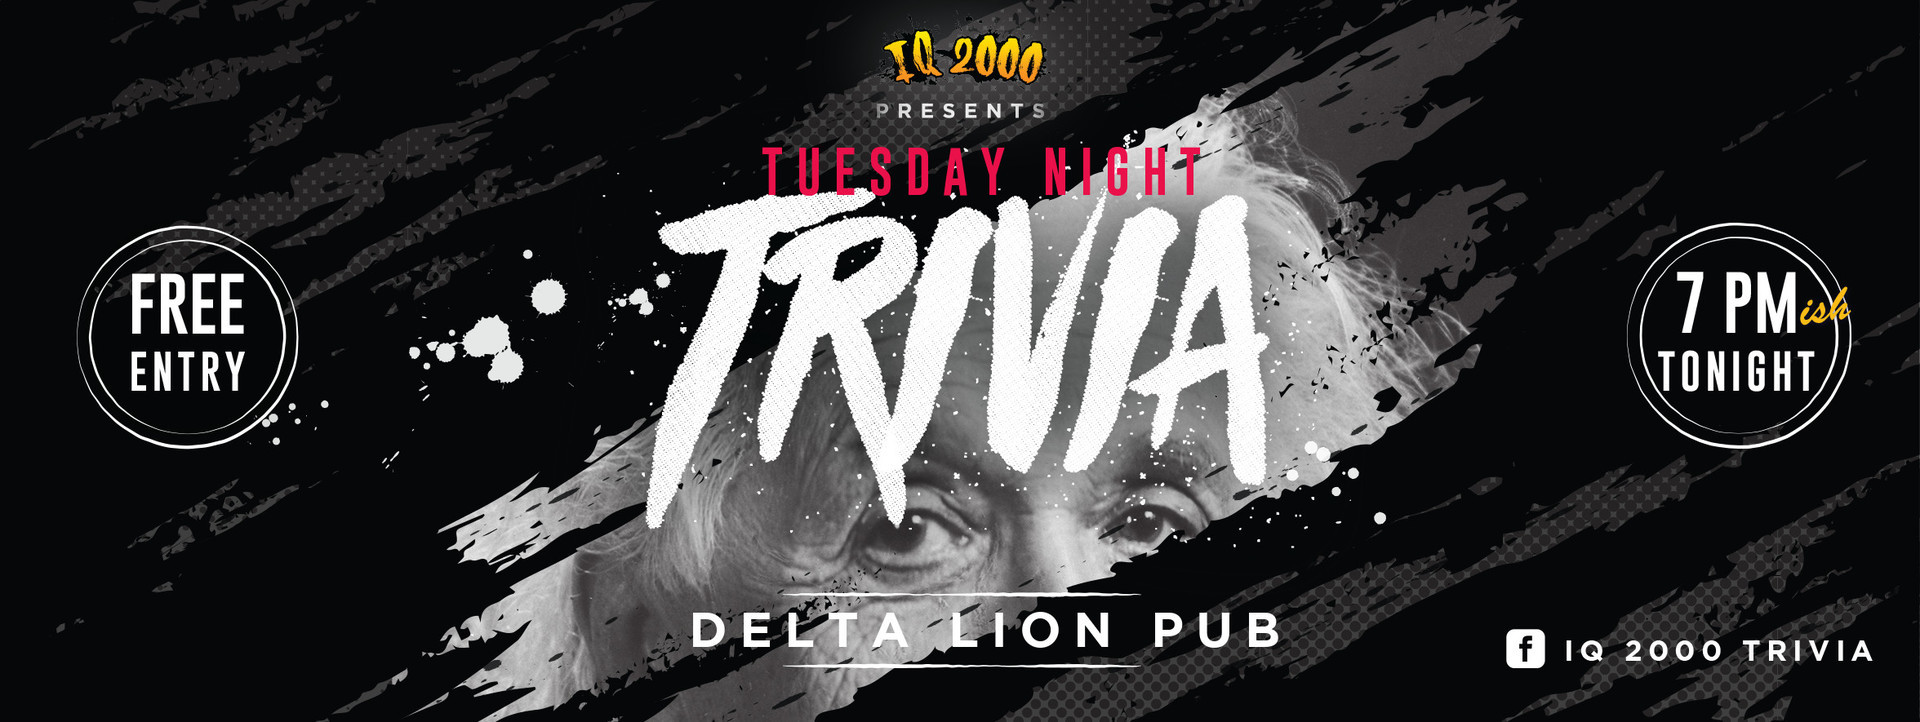 Tuesday Night Trivia at The Delta Lion Pub, Delta, British Columbia, Canada